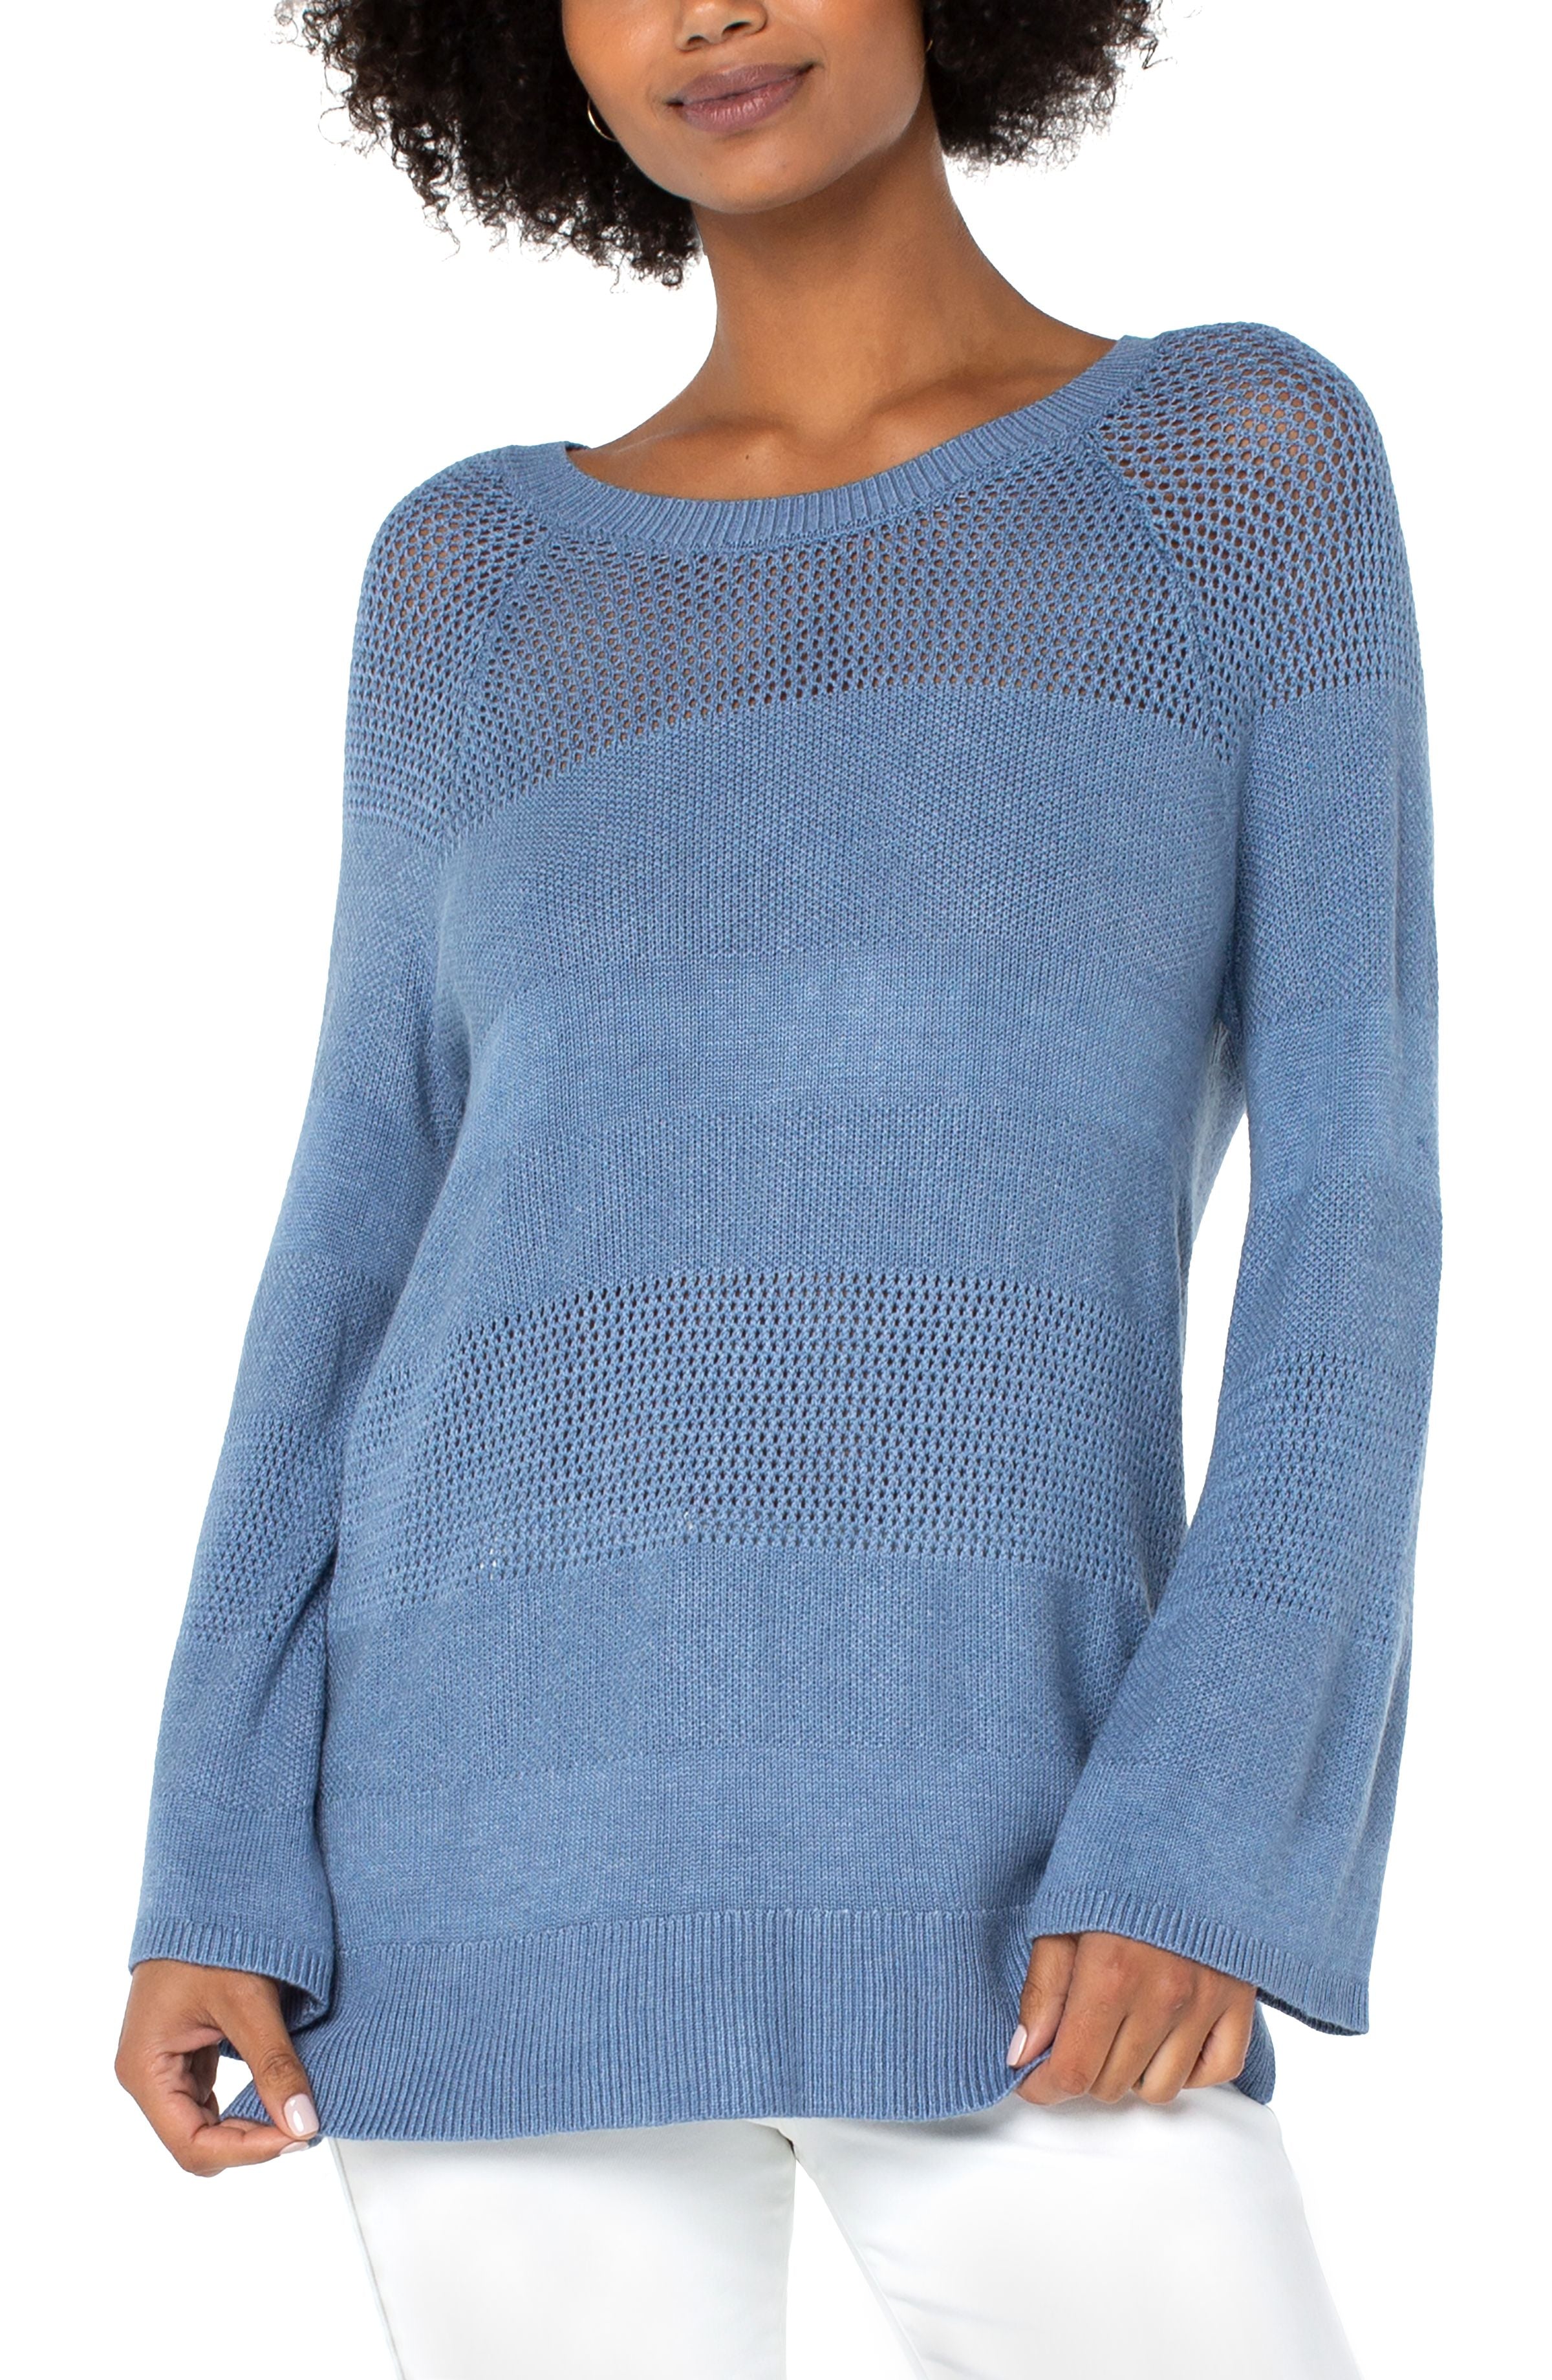 LVRP Texture Blocked Raglan Sweater